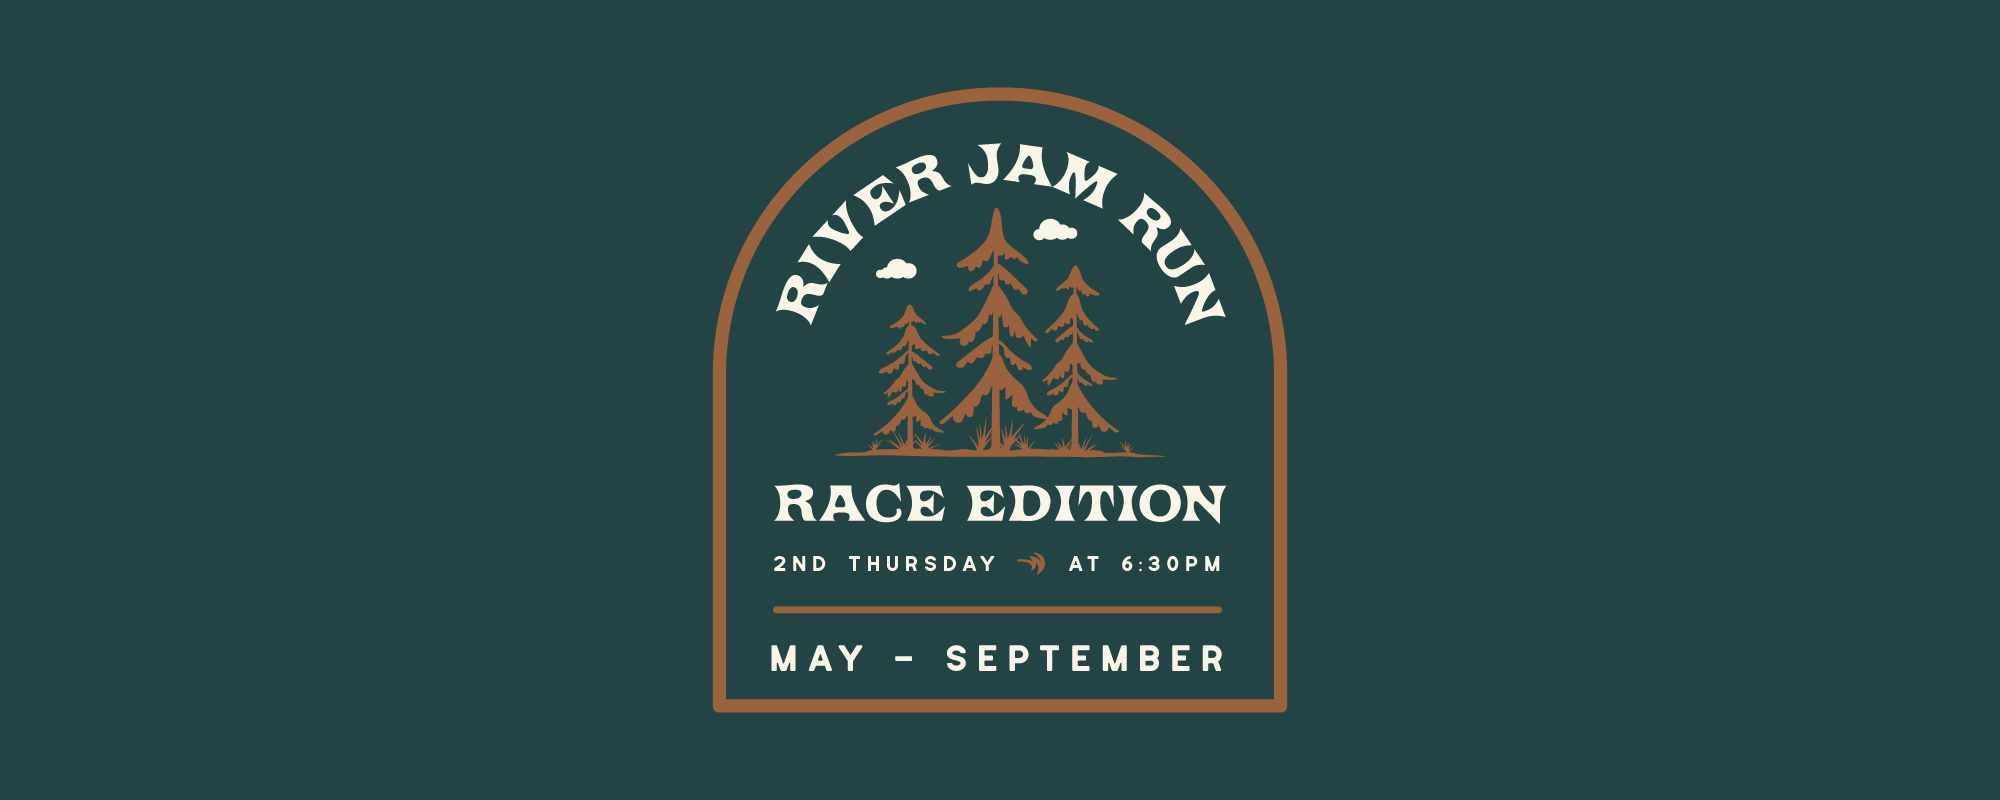 2022 River Jam Run Race Edition